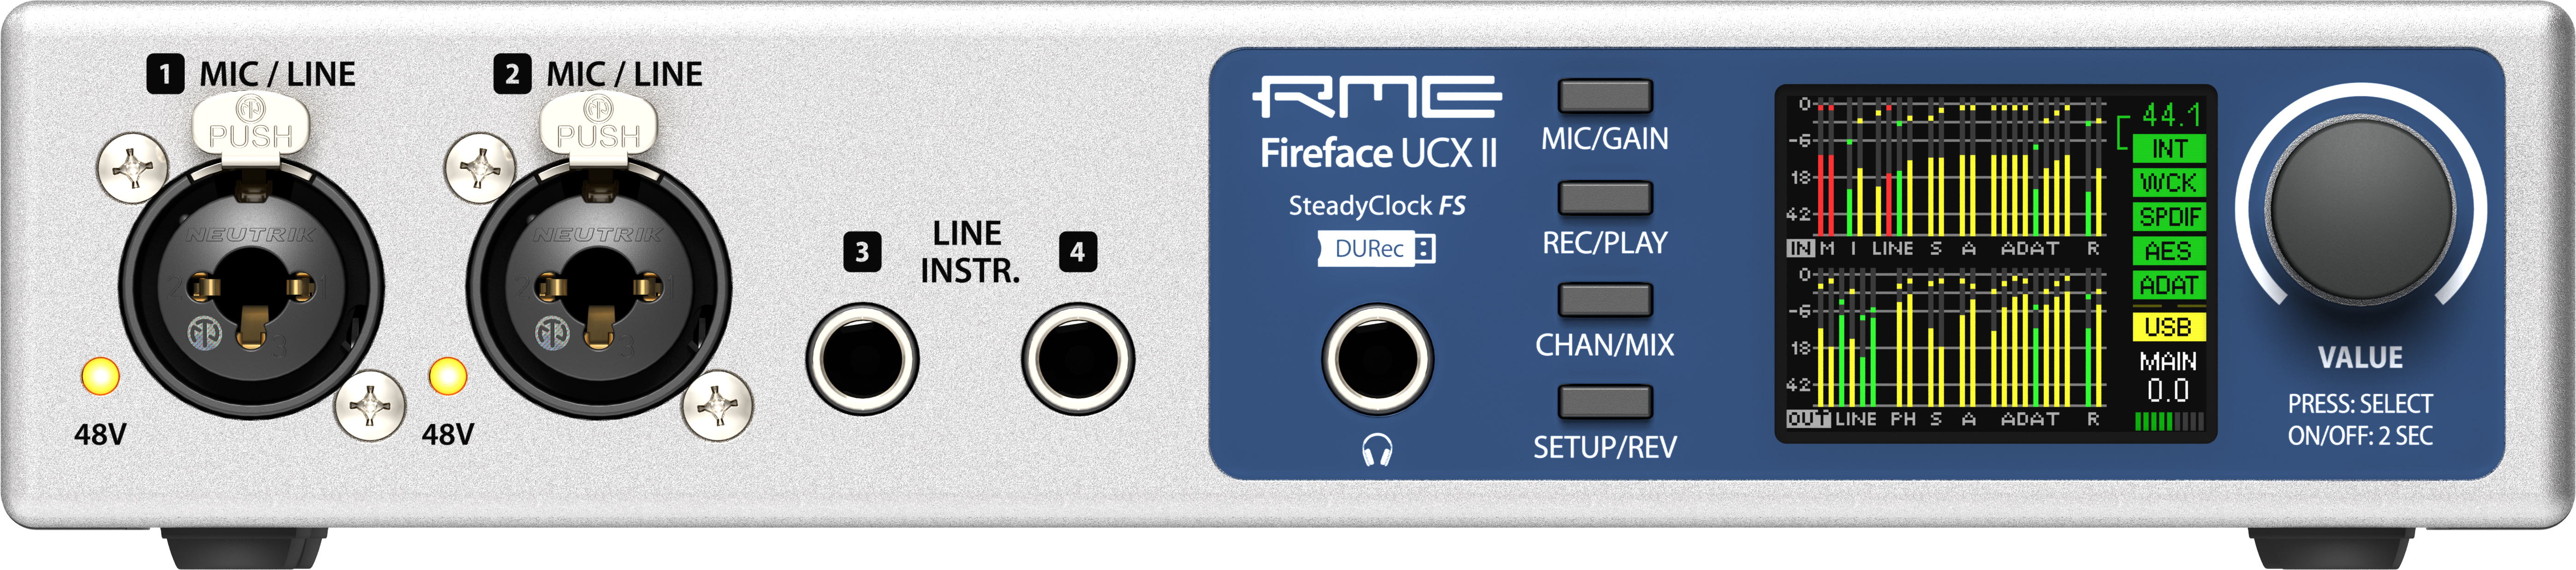 Fireface UCX II